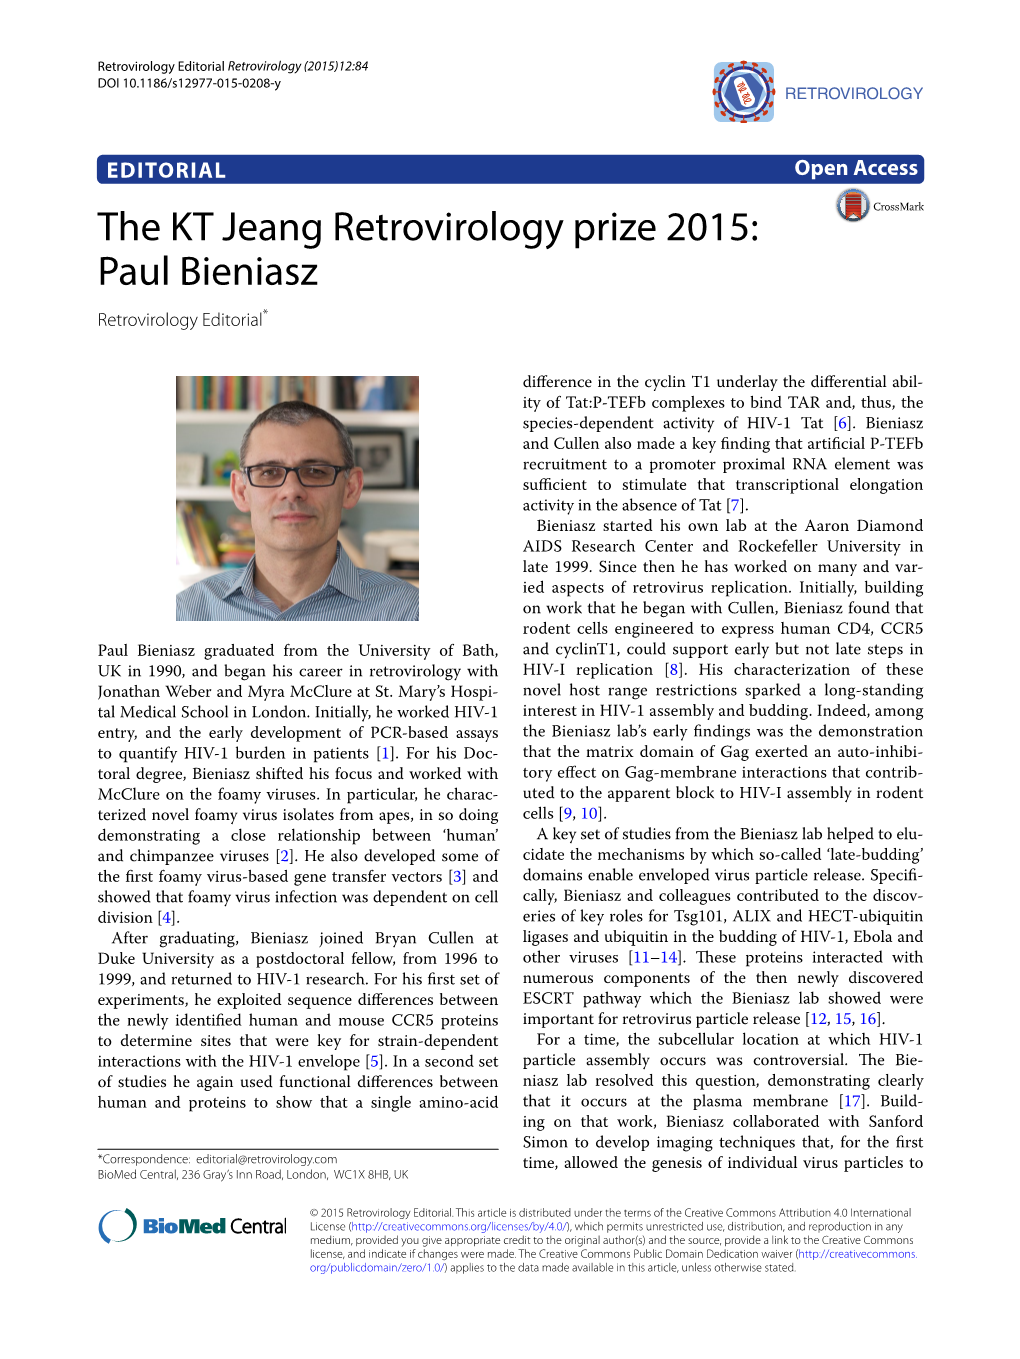 The KT Jeang Retrovirology Prize 2015: Paul Bieniasz Retrovirology Editorial*